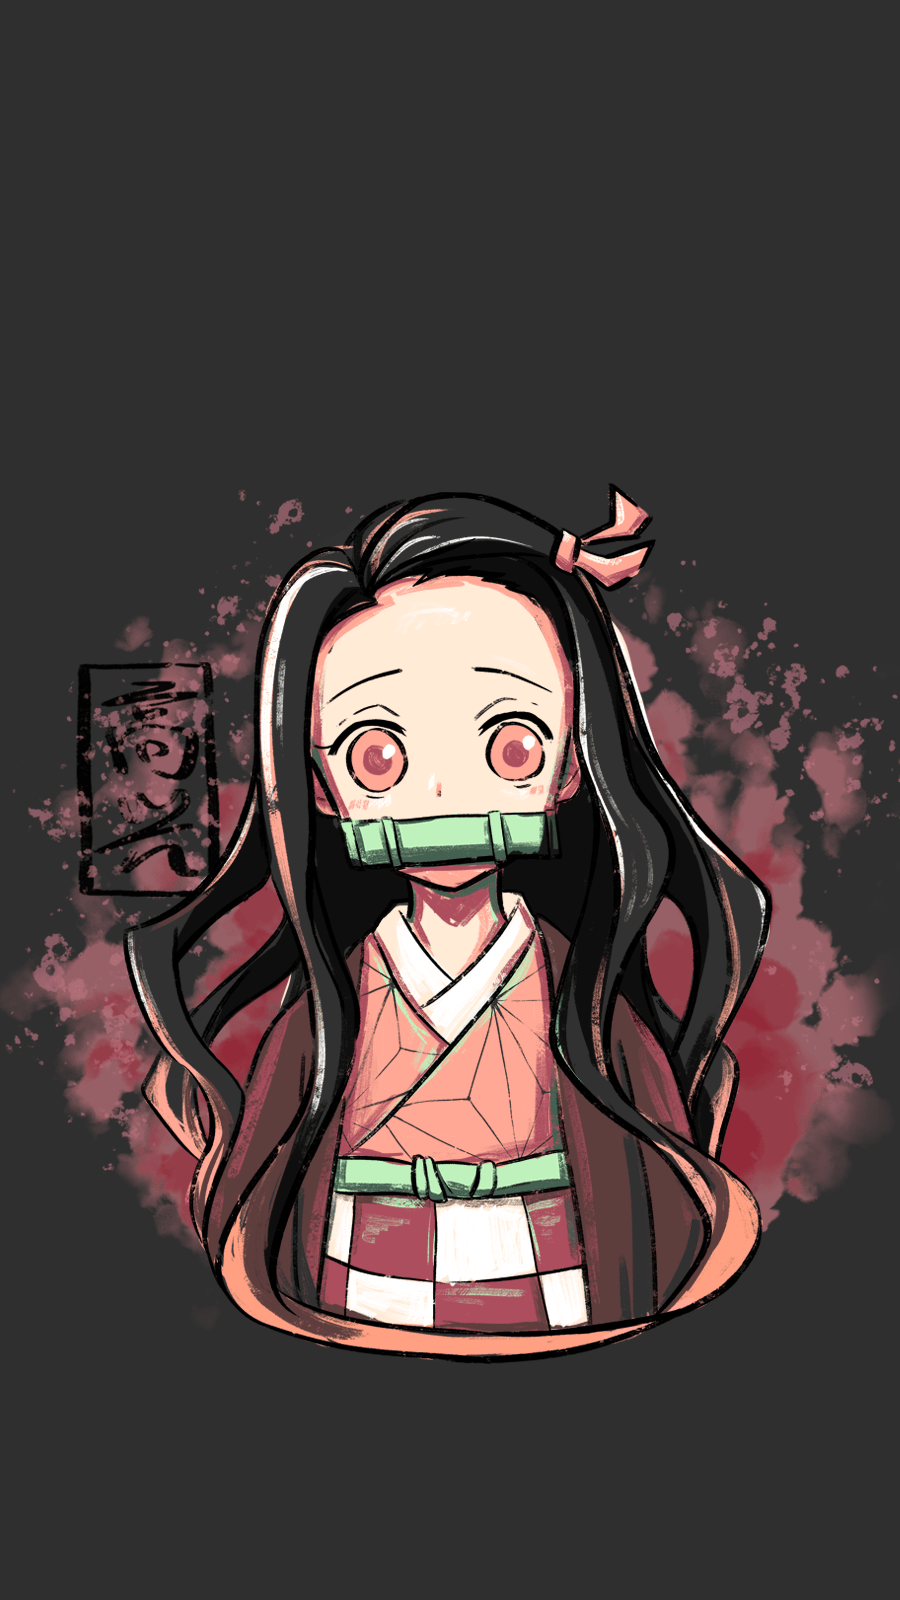 A cute chibi Nezuko from Demon Slayer with a dark background - Nezuko